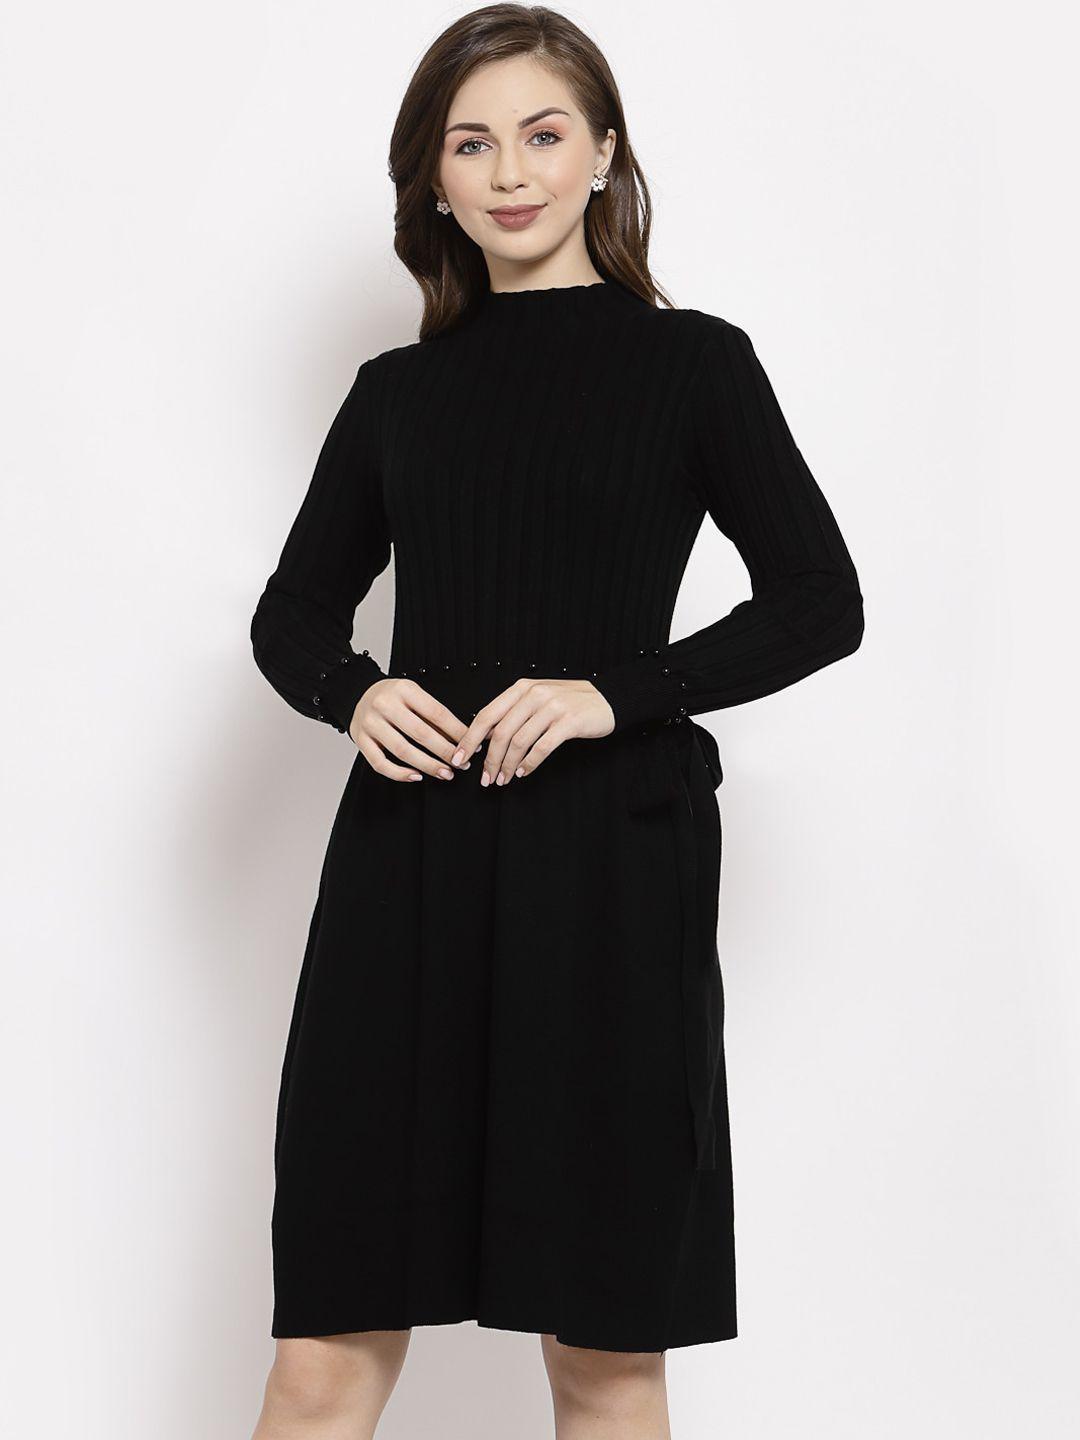 mafadeny black dress